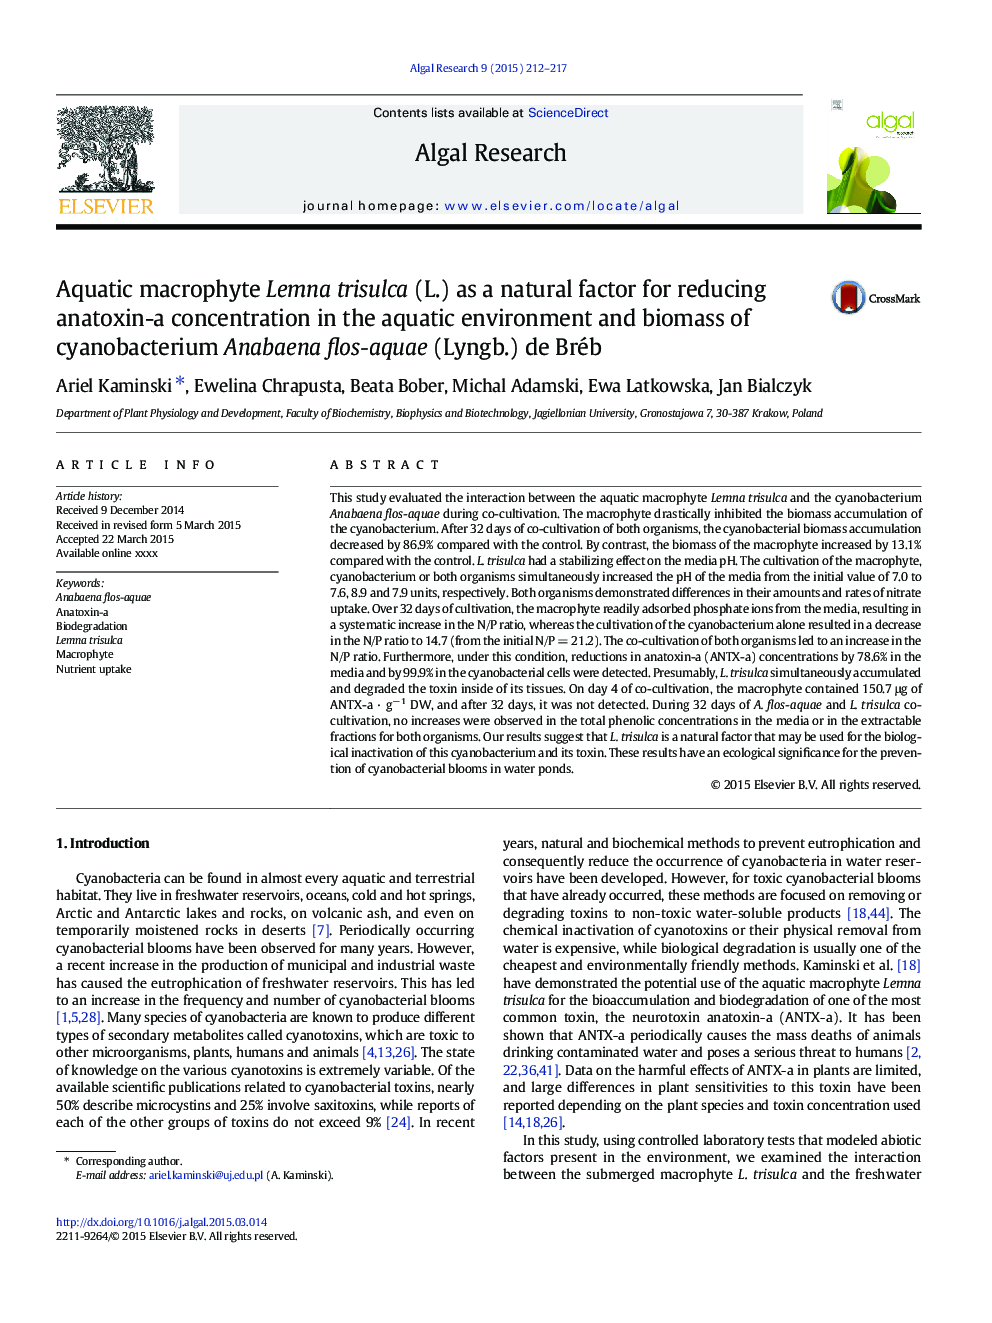 Aquatic macrophyte Lemna trisulca (L.) as a natural factor for reducing anatoxin-a concentration in the aquatic environment and biomass of cyanobacterium Anabaena flos-aquae (Lyngb.) de Bréb